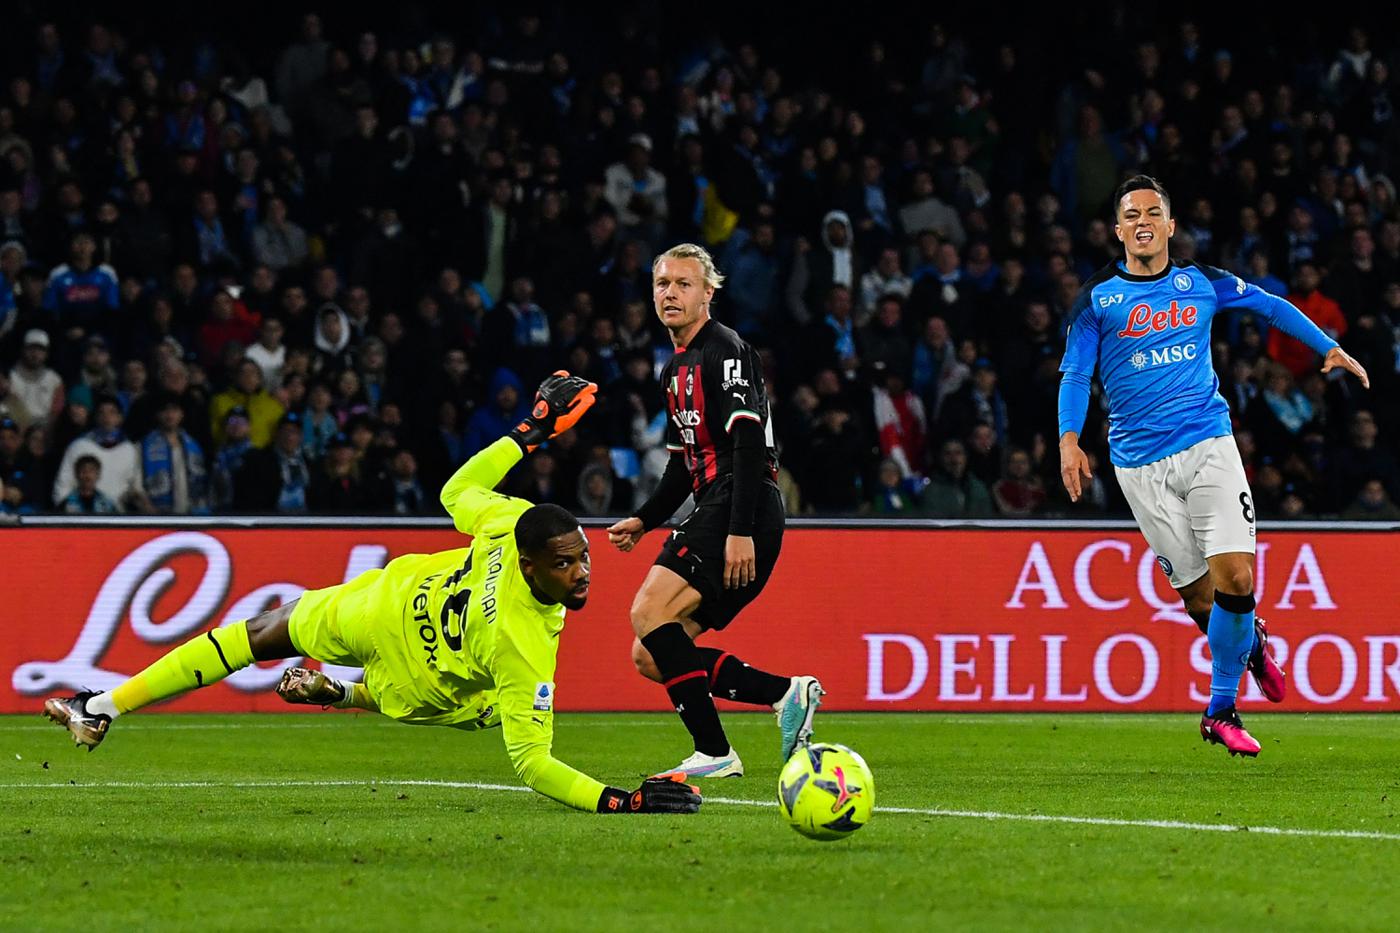 Napoli - Milan - 0:4. Italian Championship, 28th round. Match review, statistics